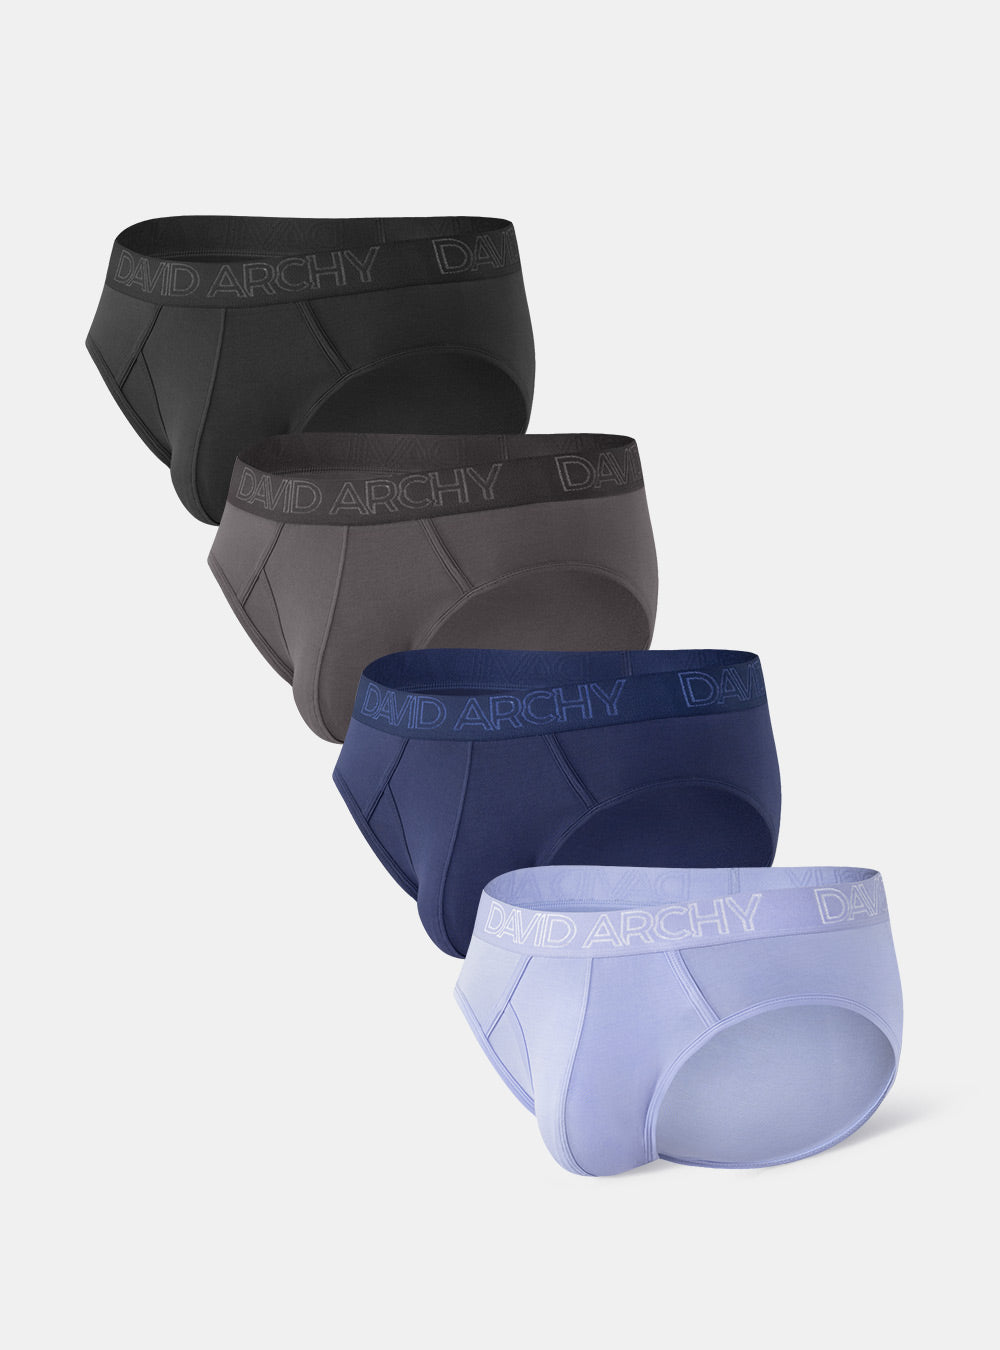 David Archy Underwear DANK08B Men's Rayon Breathable Ultra Soft